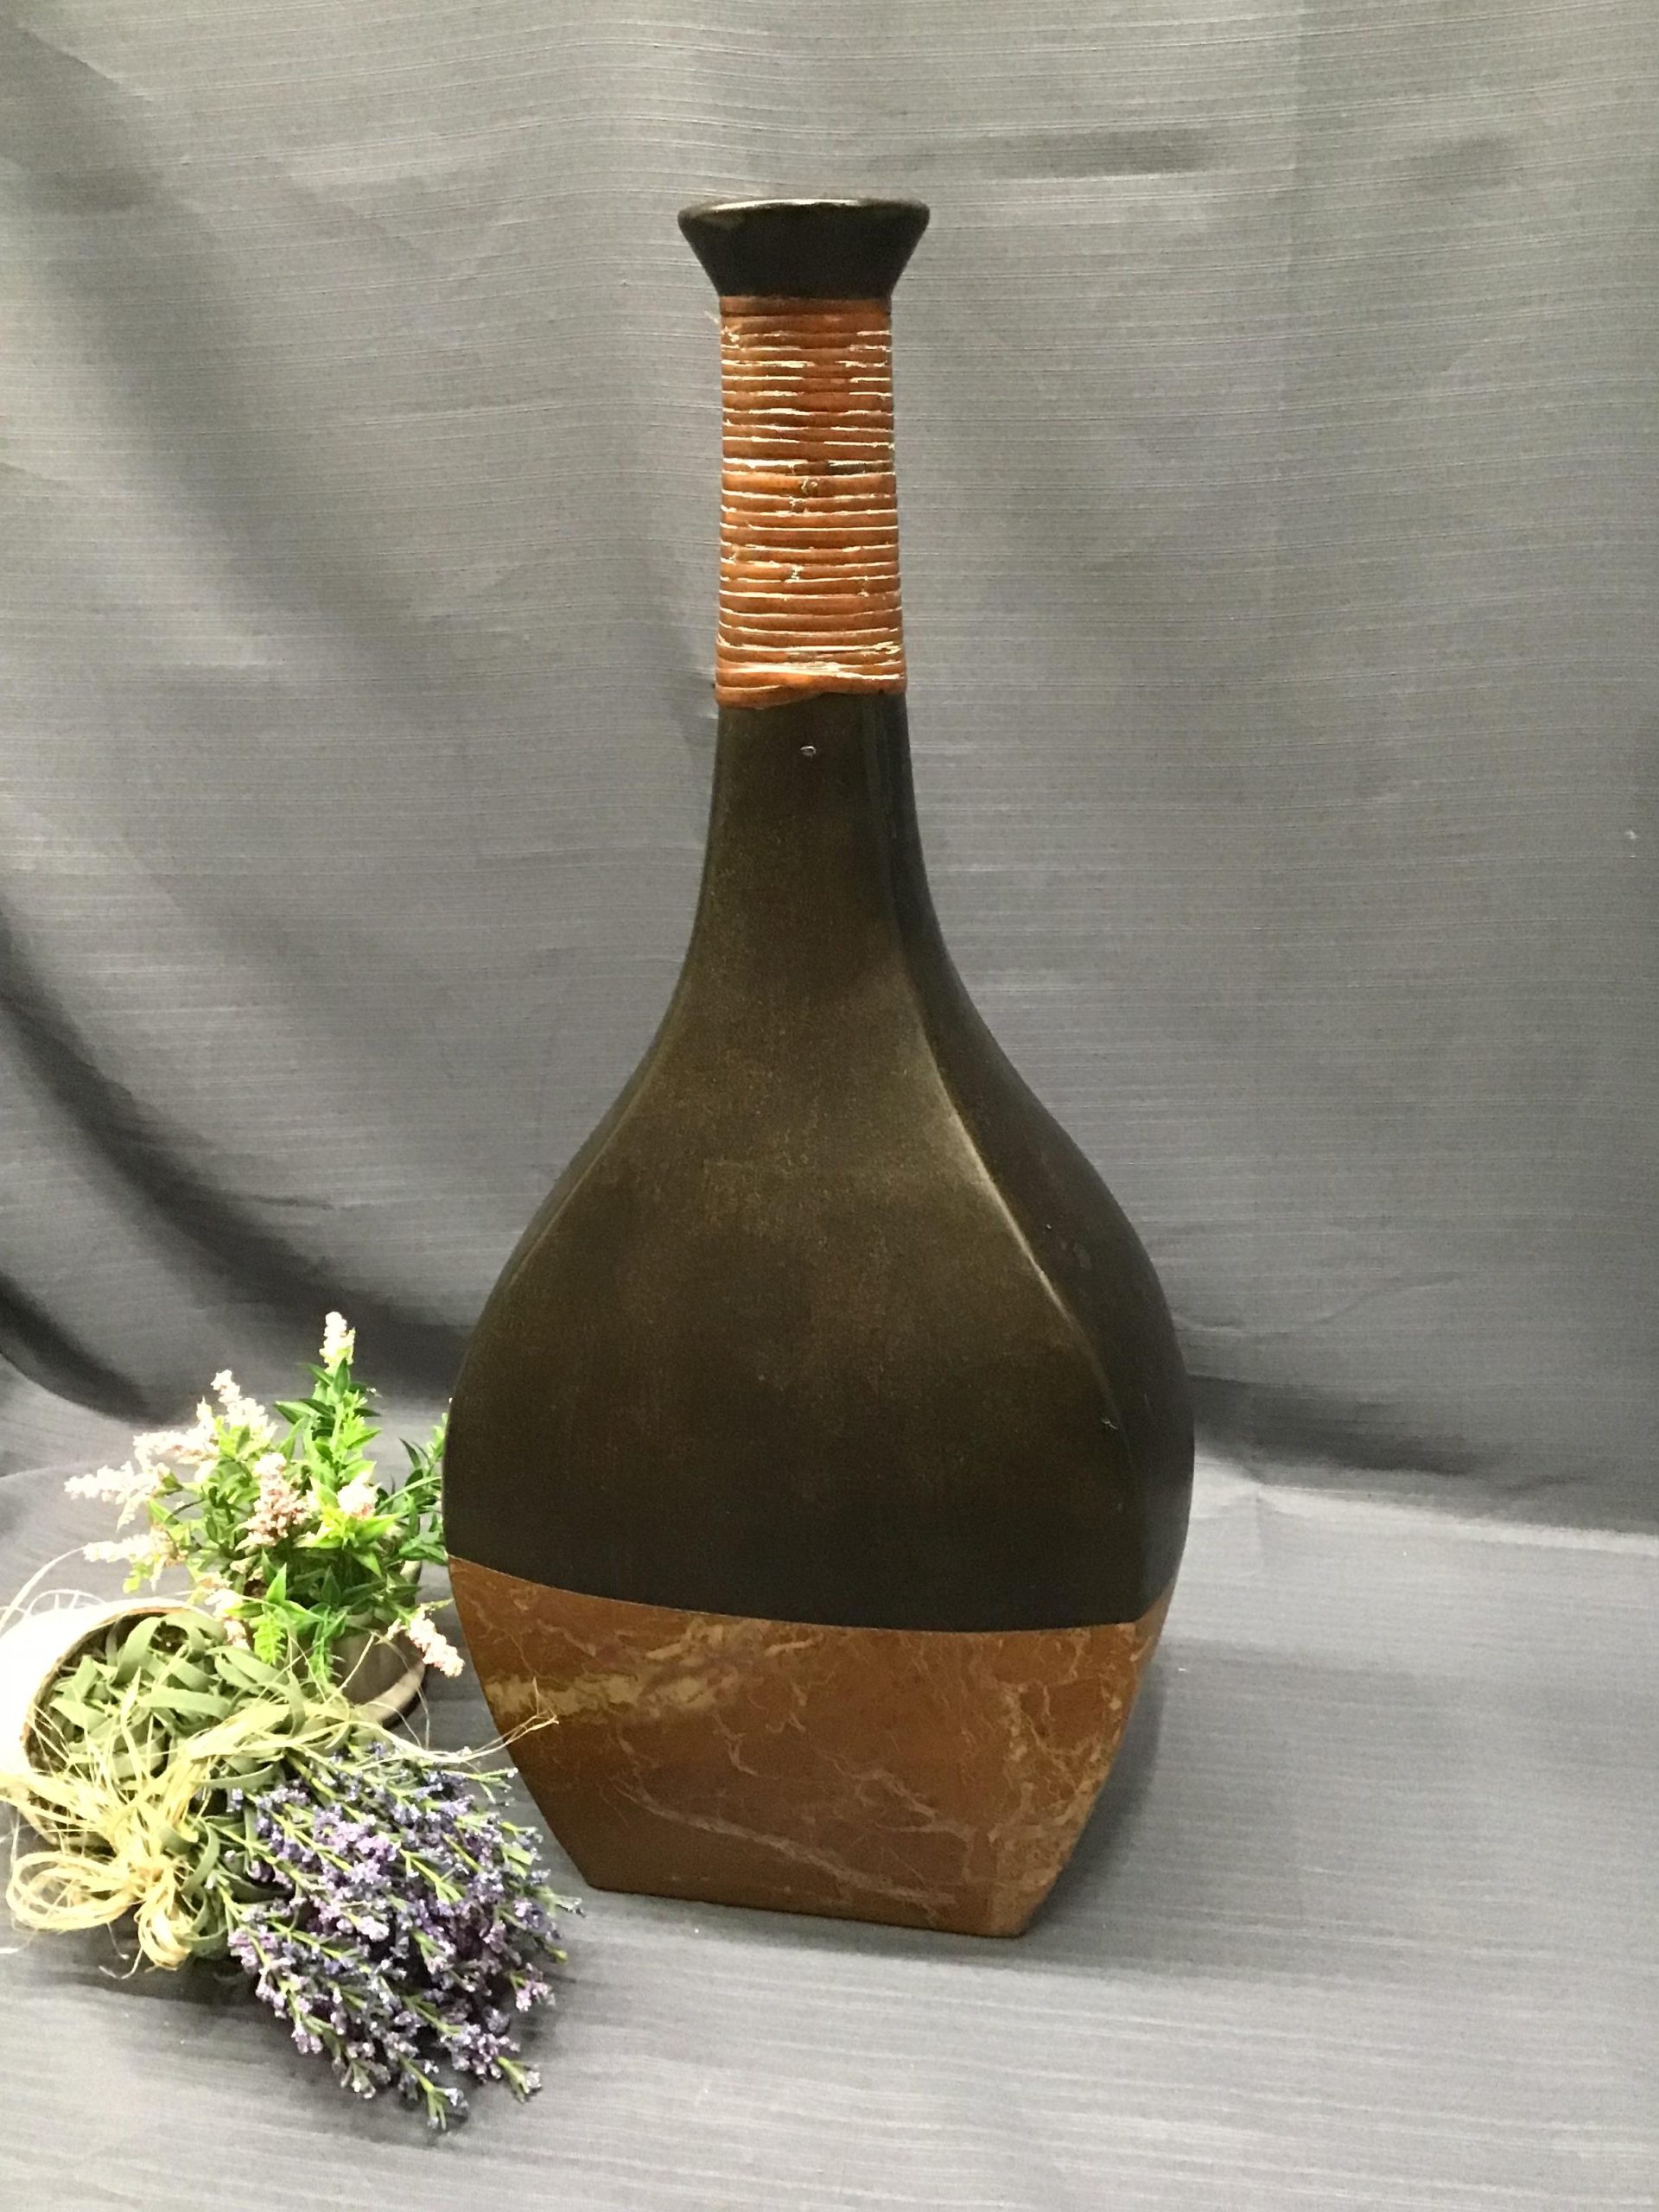 Tall Drk. Brown/ Rust Ceramic Vase